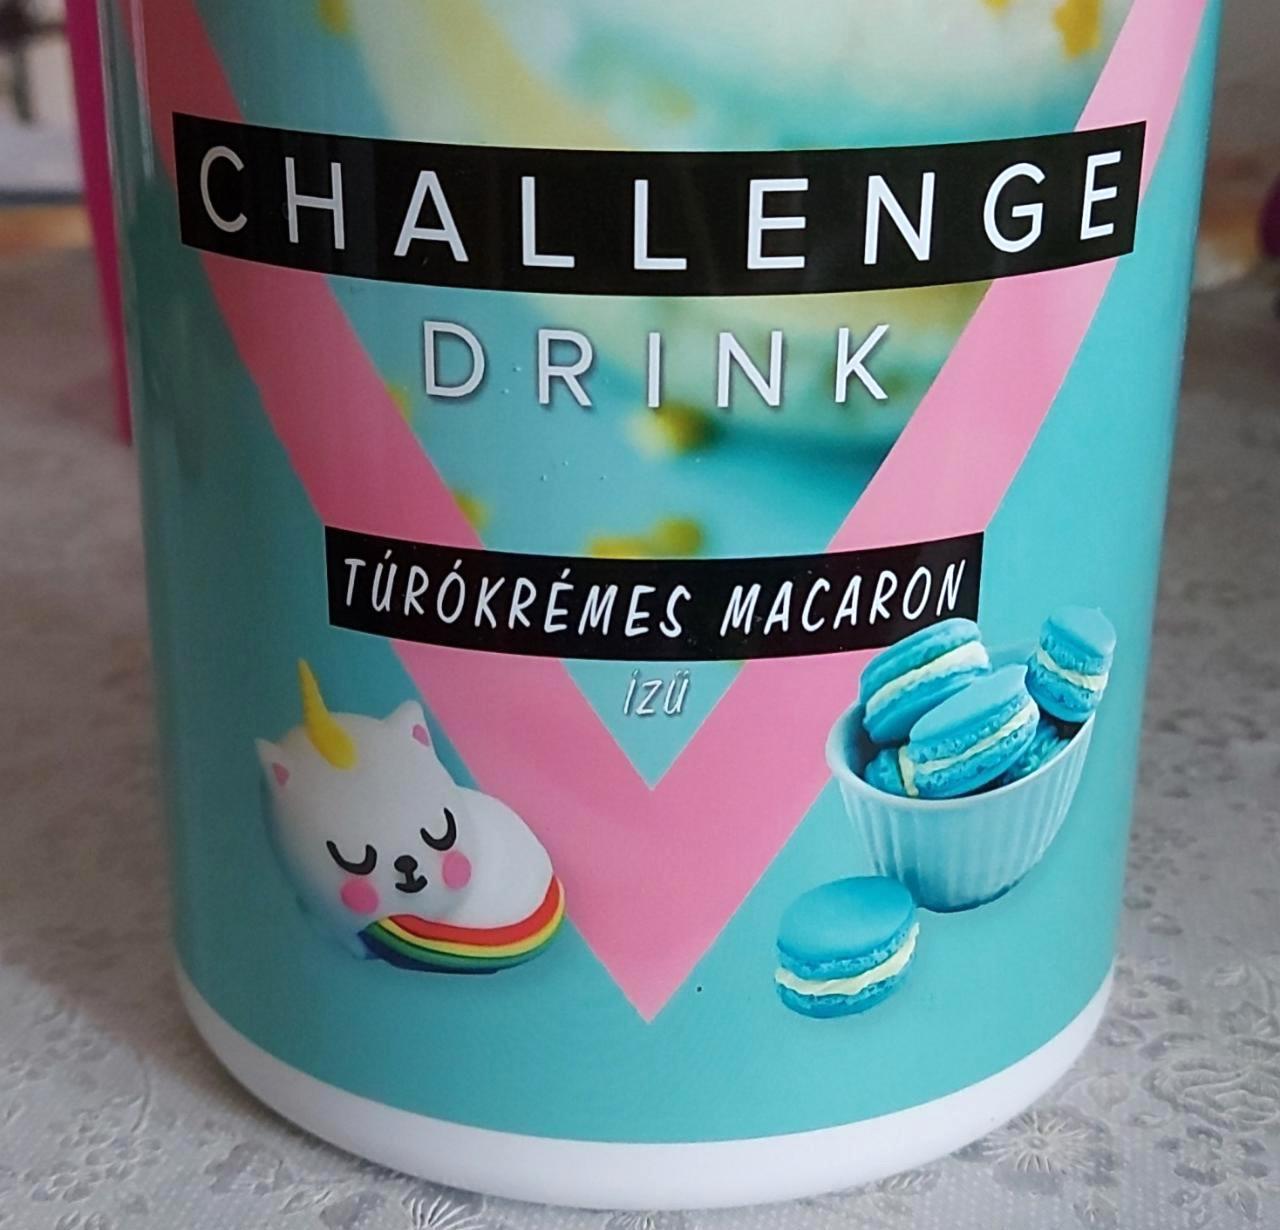 Képek - Challenge drink túrókrémes macaron Manker